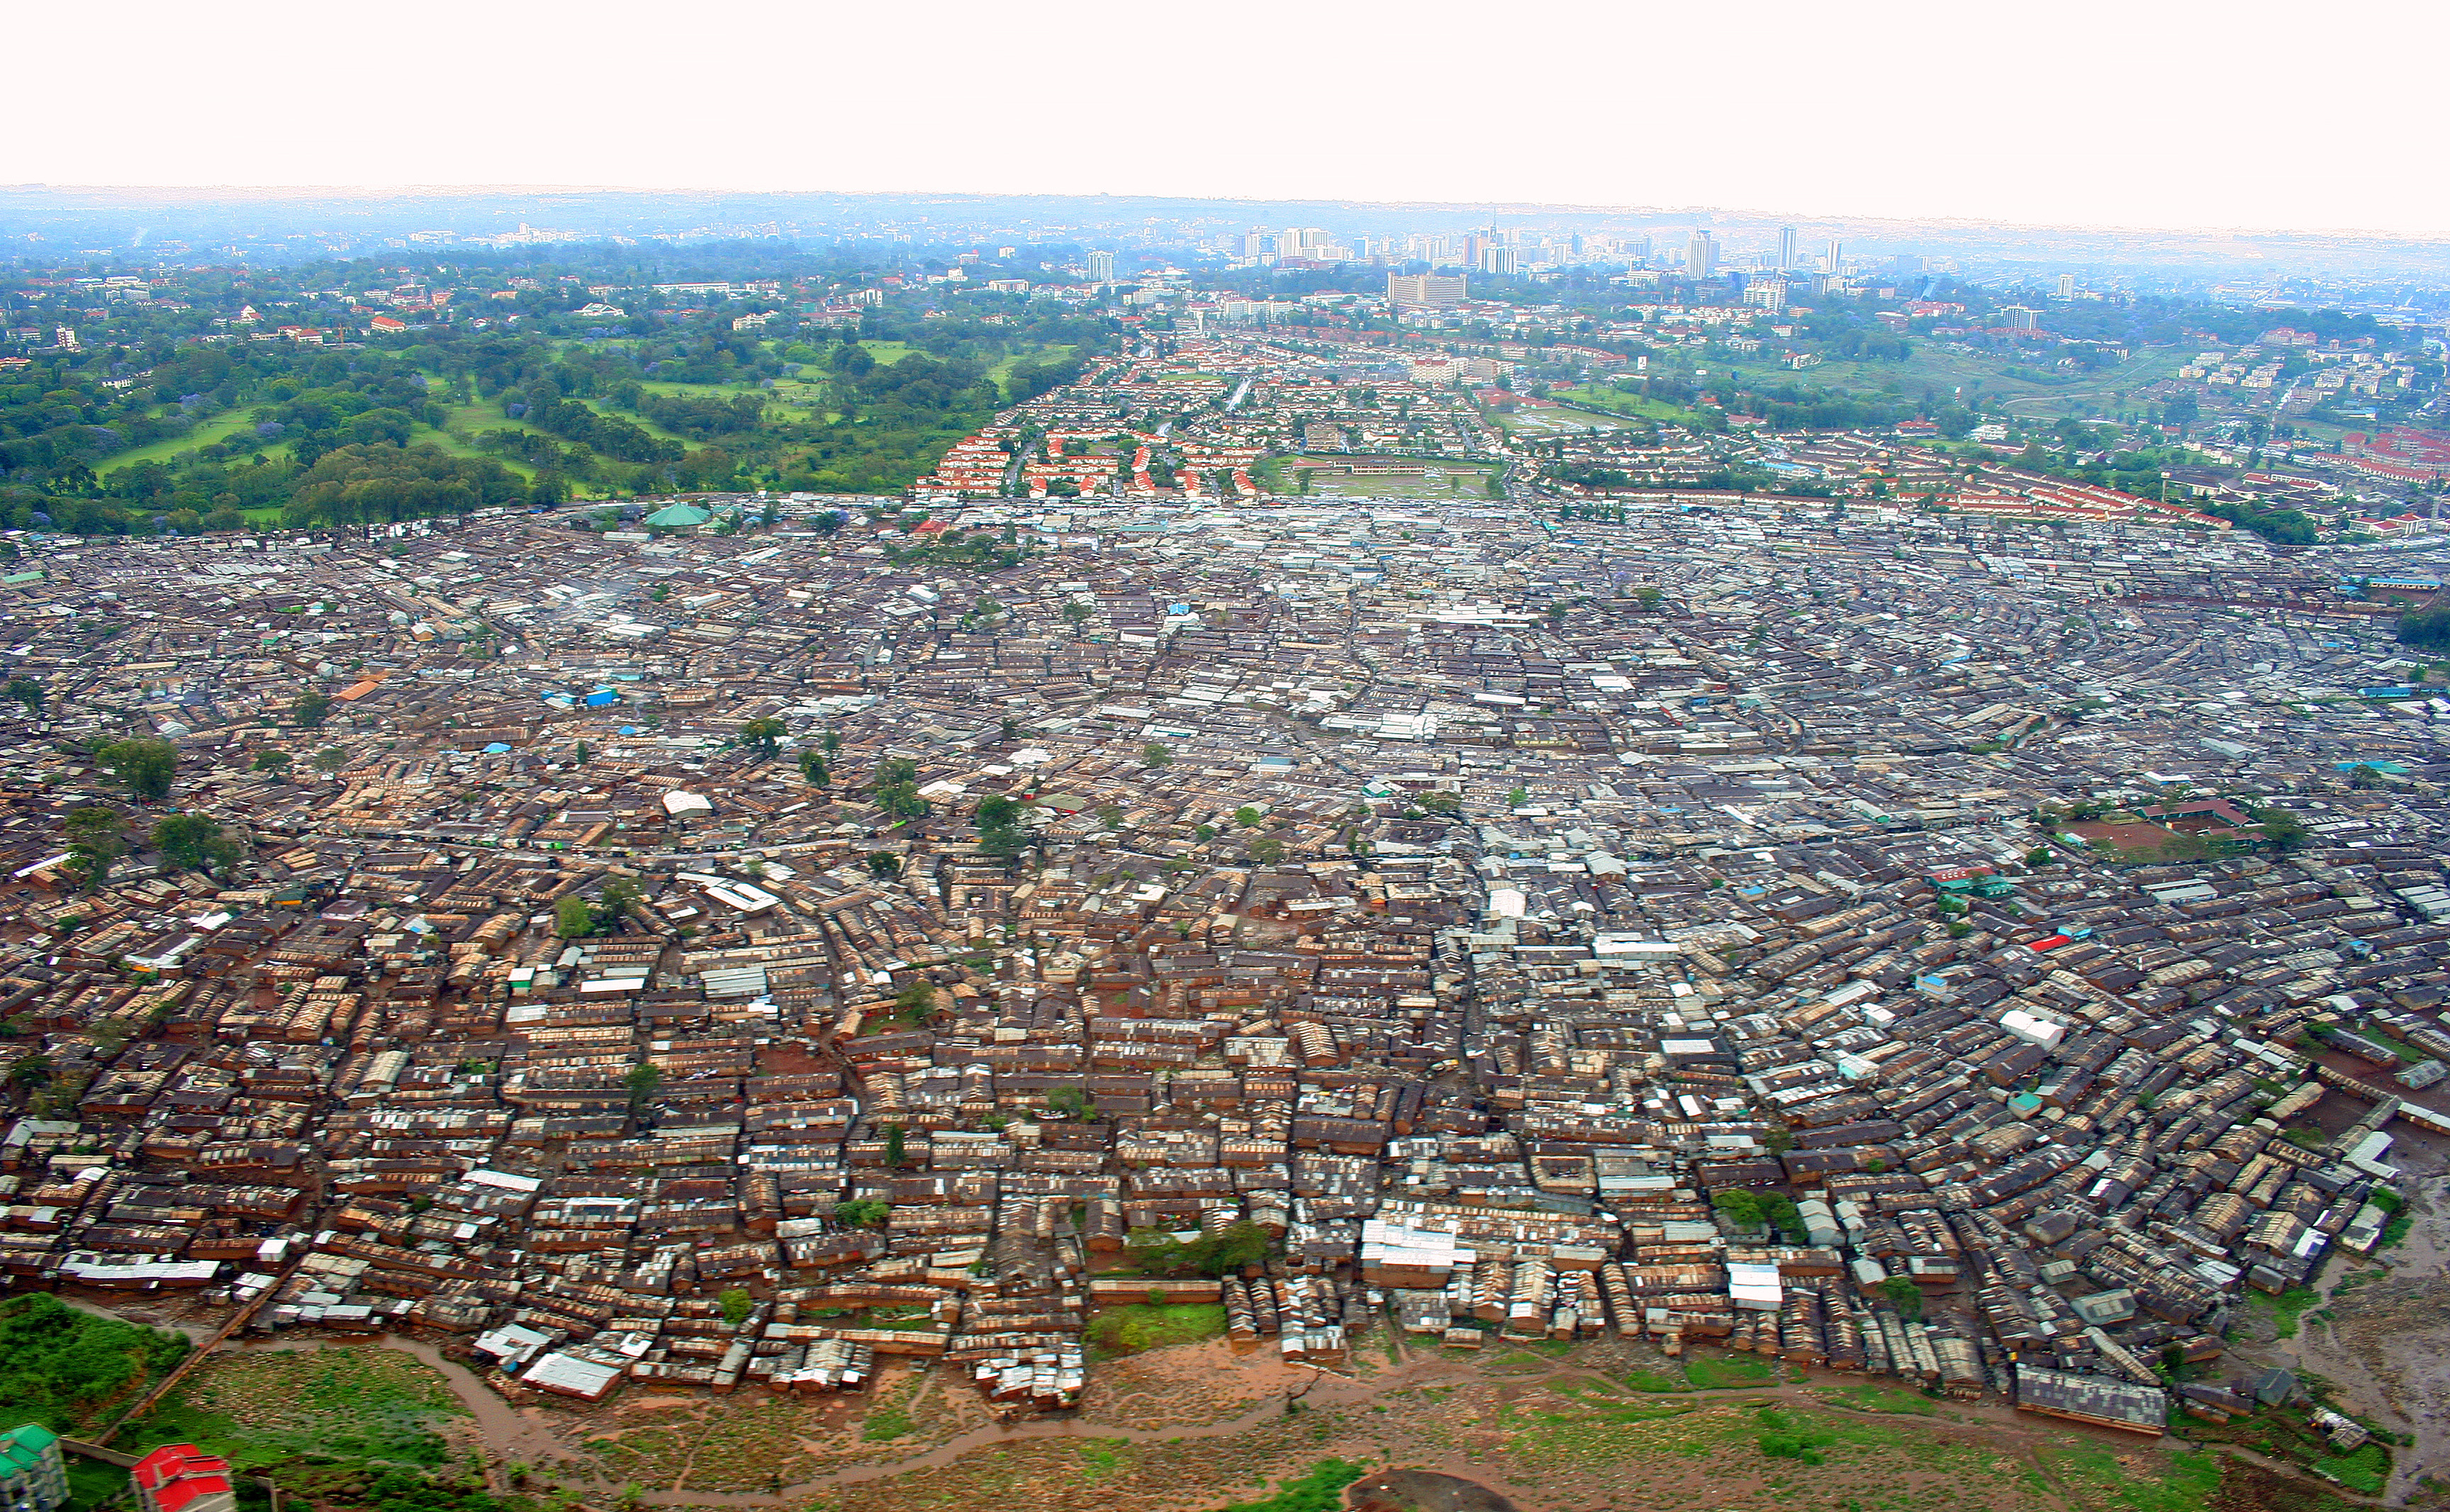 http://upload.wikimedia.org/wikipedia/commons/a/a2/Nairobi_Kibera_04.JPG